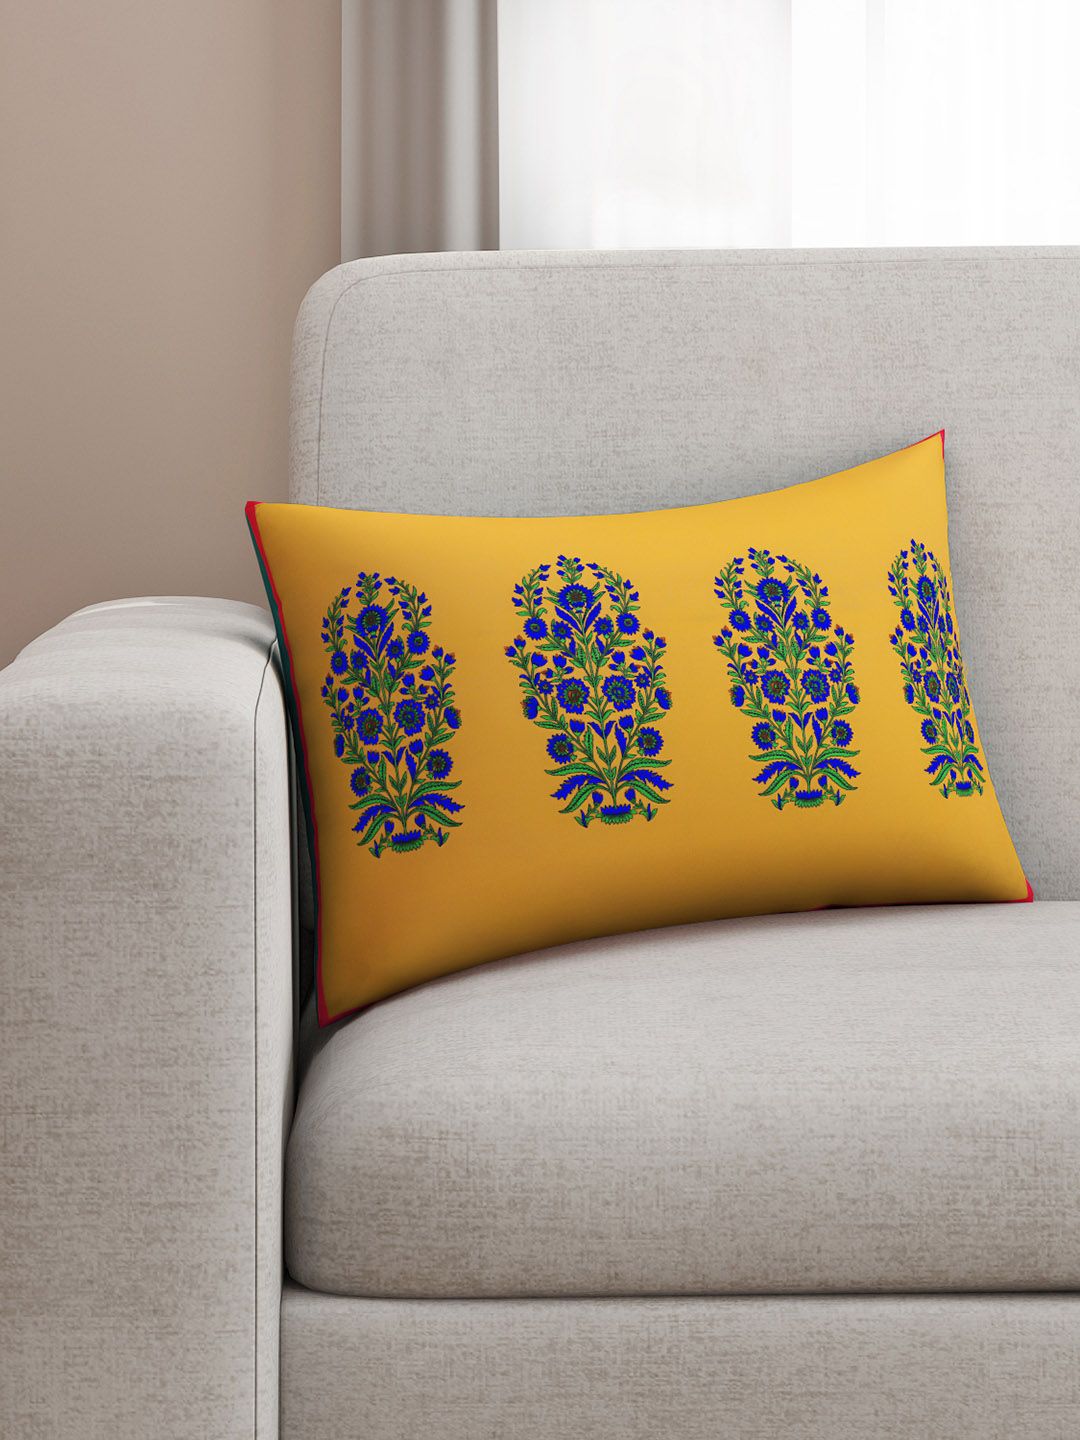 SEJ by Nisha Gupta Mustard Set of Single Ethnic Motifs Rectangle Cushion Covers Price in India